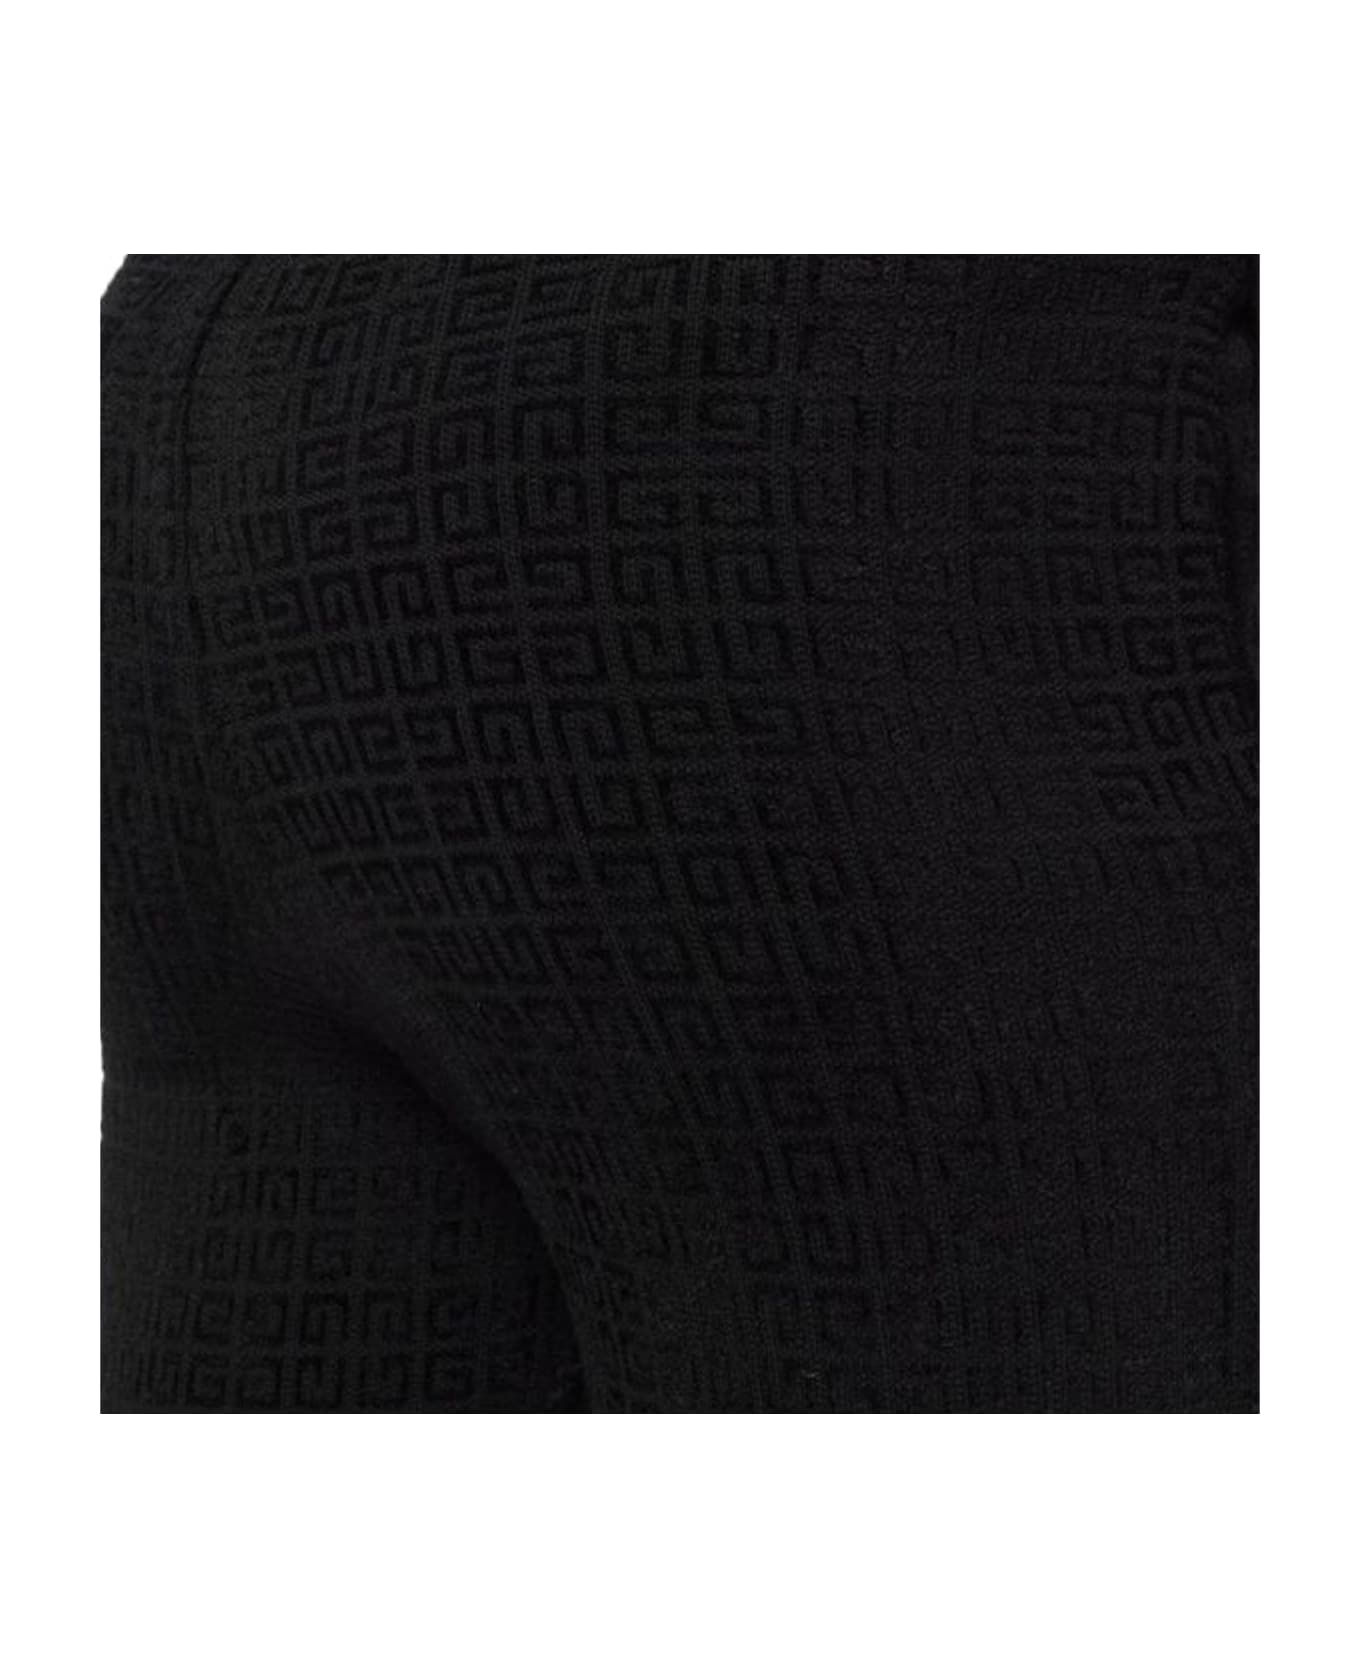 Givenchy Logo Sweatpants - Black